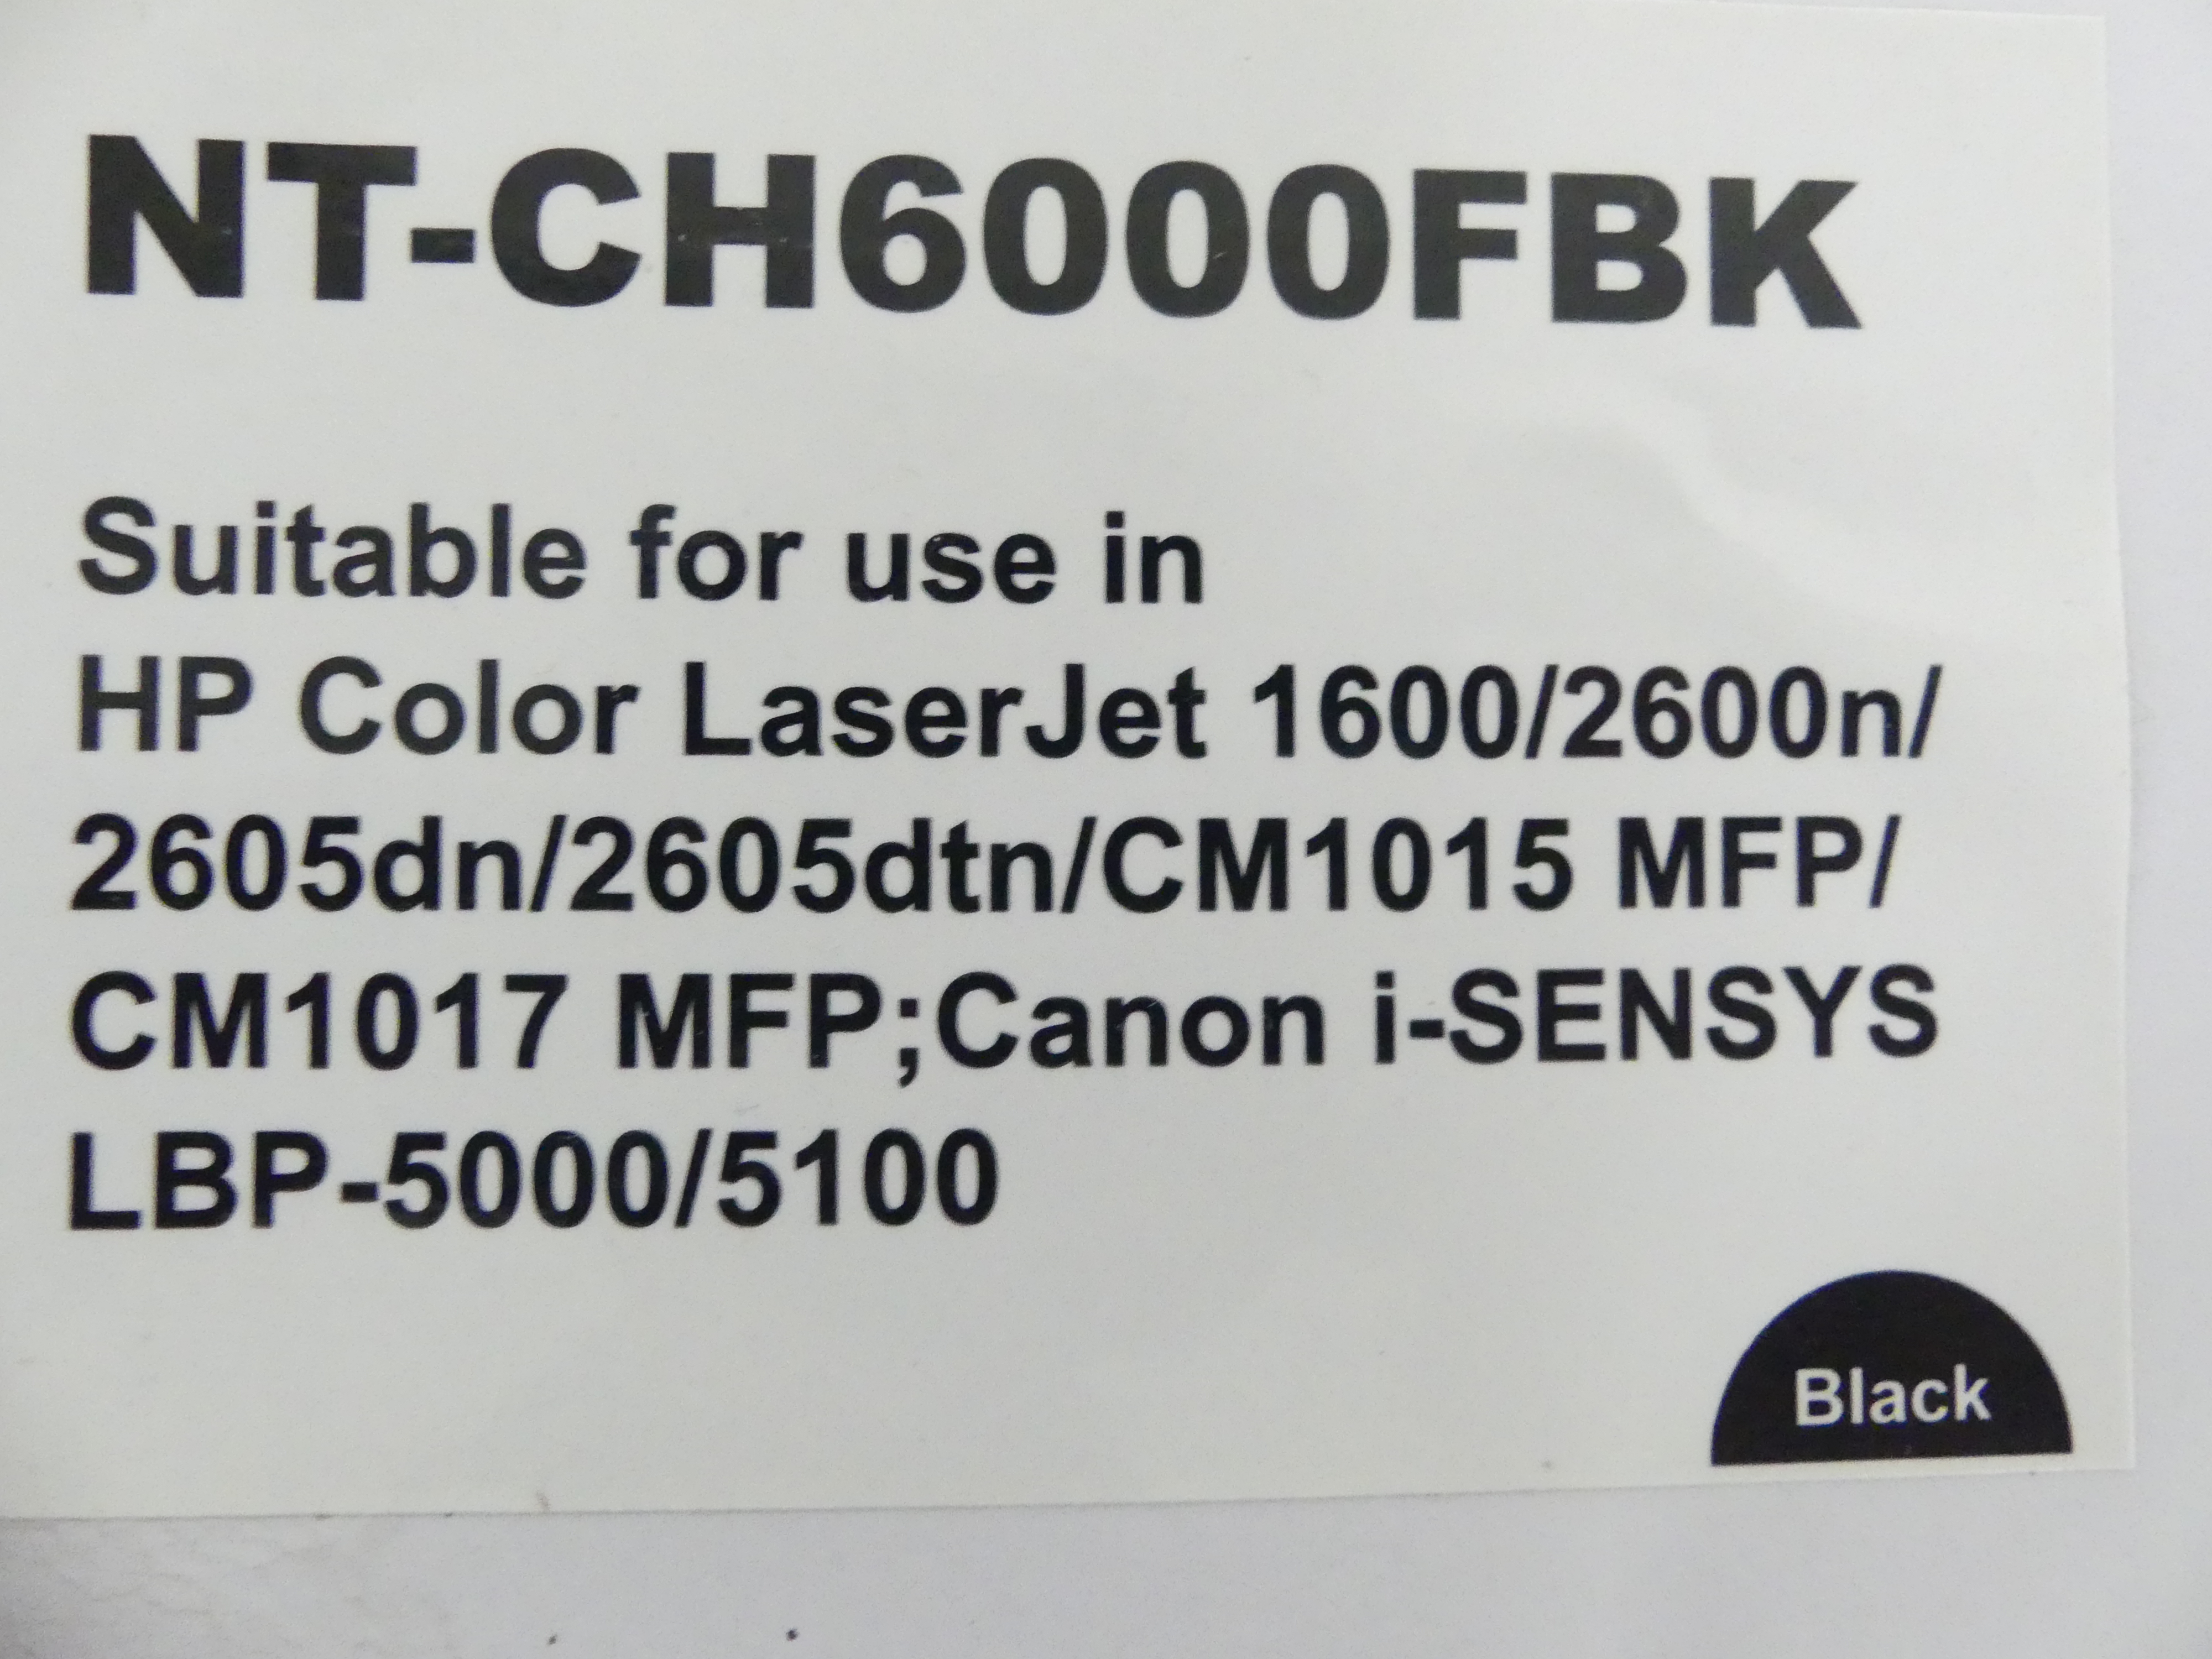 Toner Cartridge NT-CH6000FBK